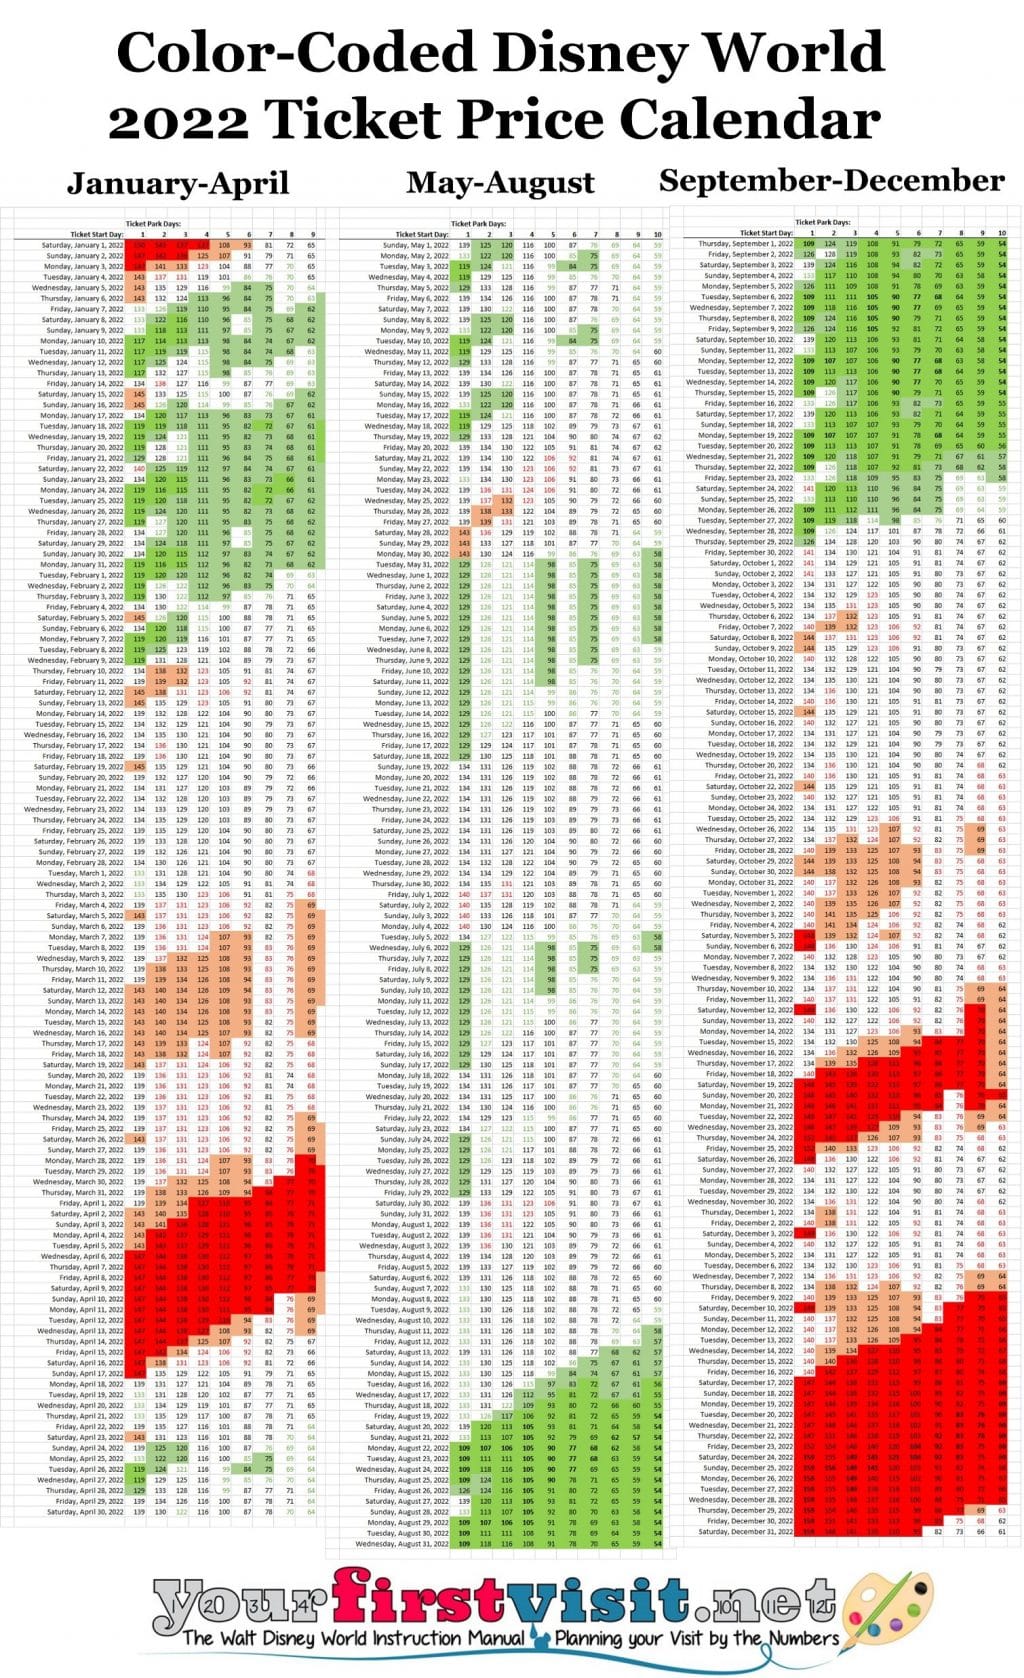 Disney Crowd Calendar 2022 Disney World 2022 Ticket Prices In A Color-Coded Calendar -  Yourfirstvisit.net